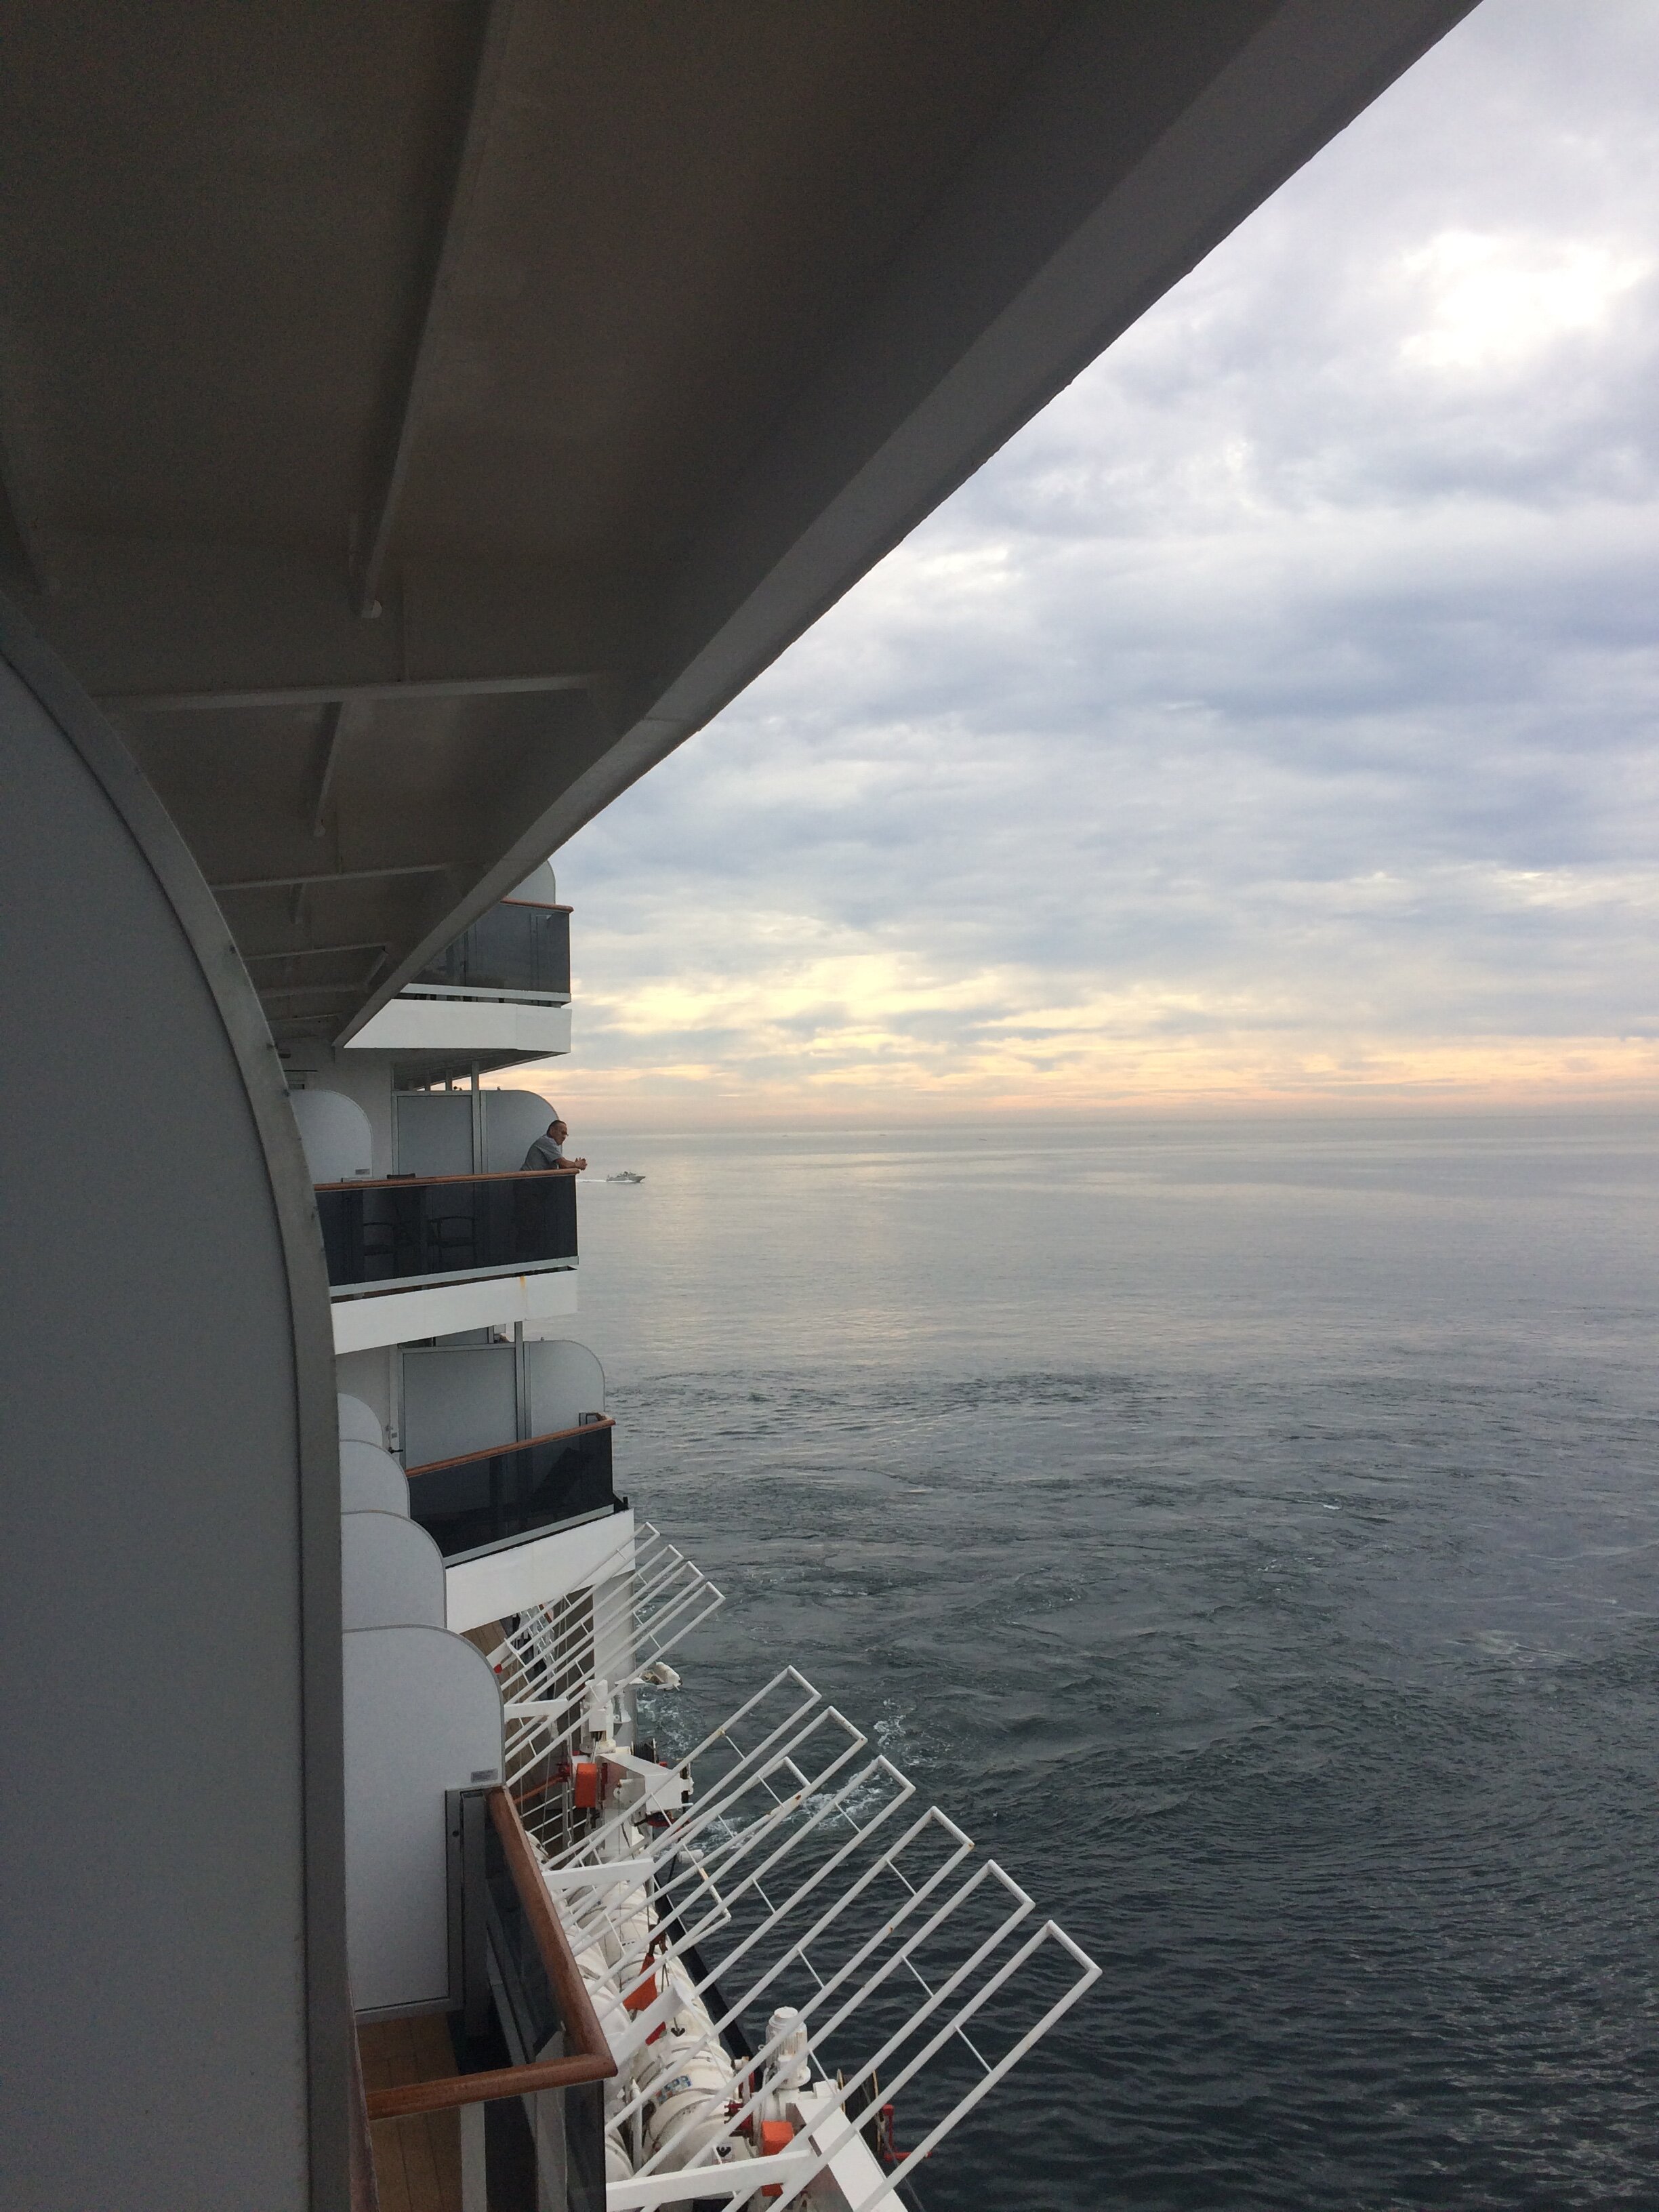 Cruise ship approaching Cabo San Lucas